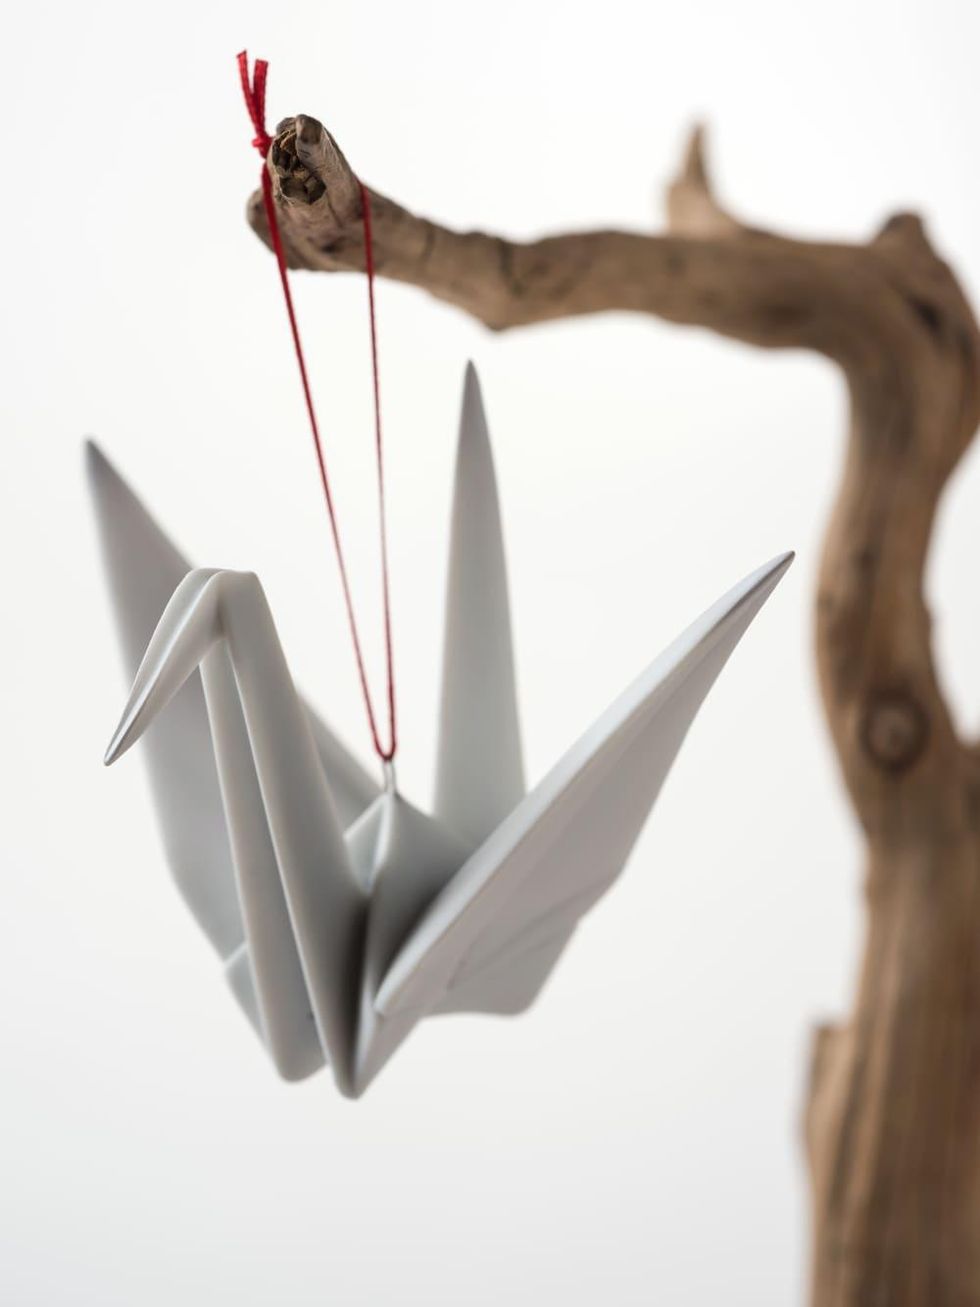 Porcelain crane origami ornament at the Lotus Shop